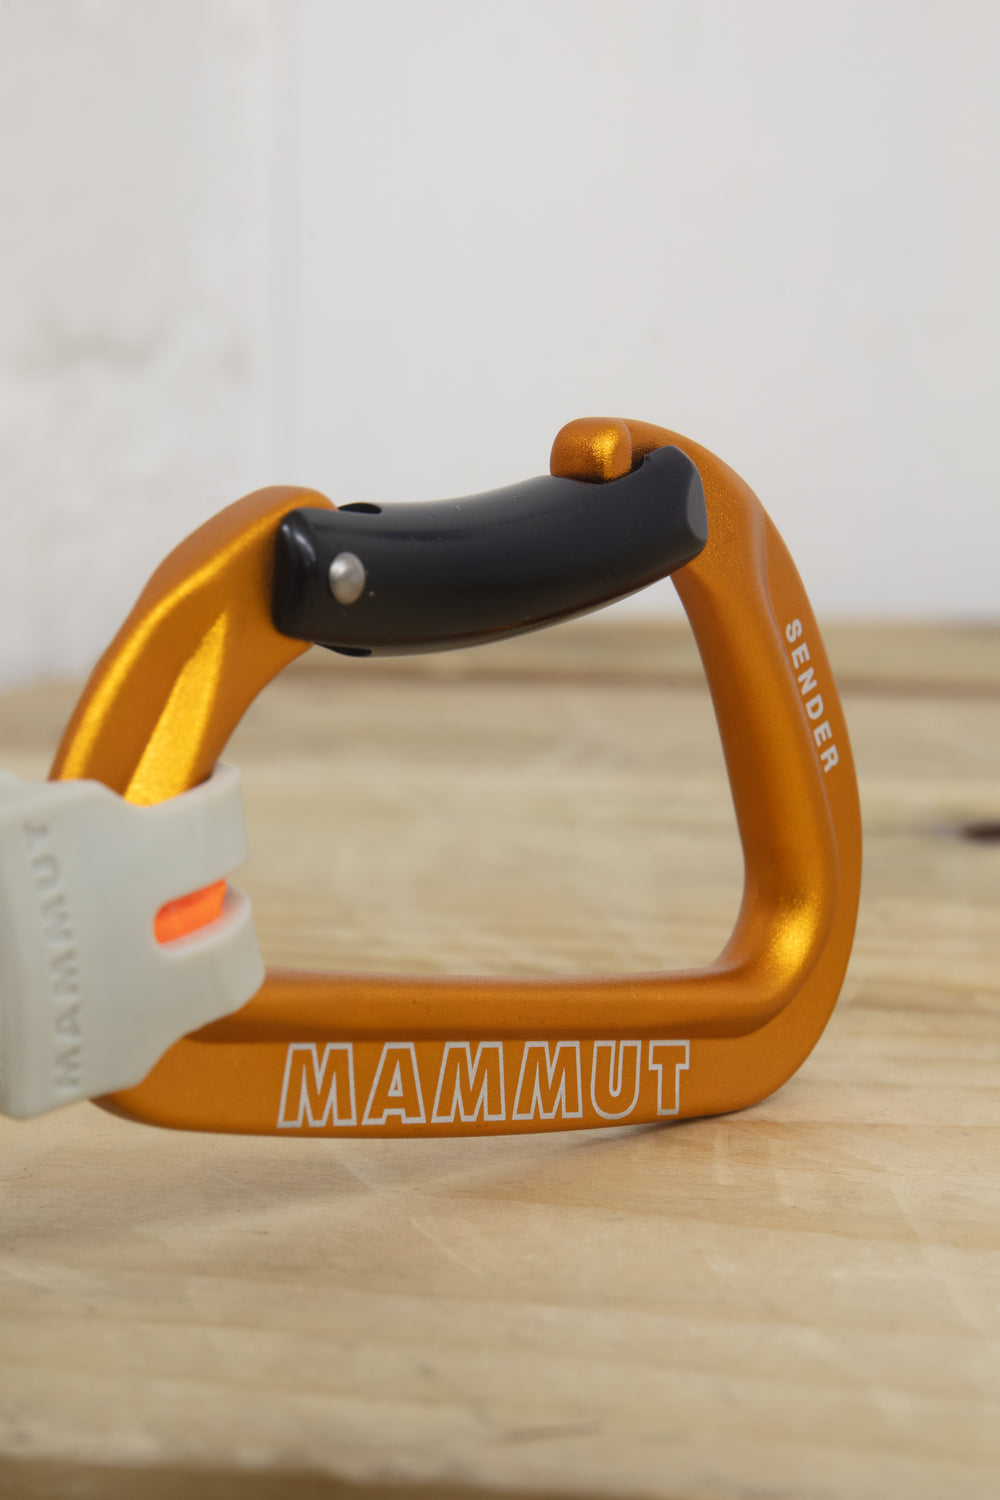 Mammut - Sender Keylock Quickdraw - 6 Pack